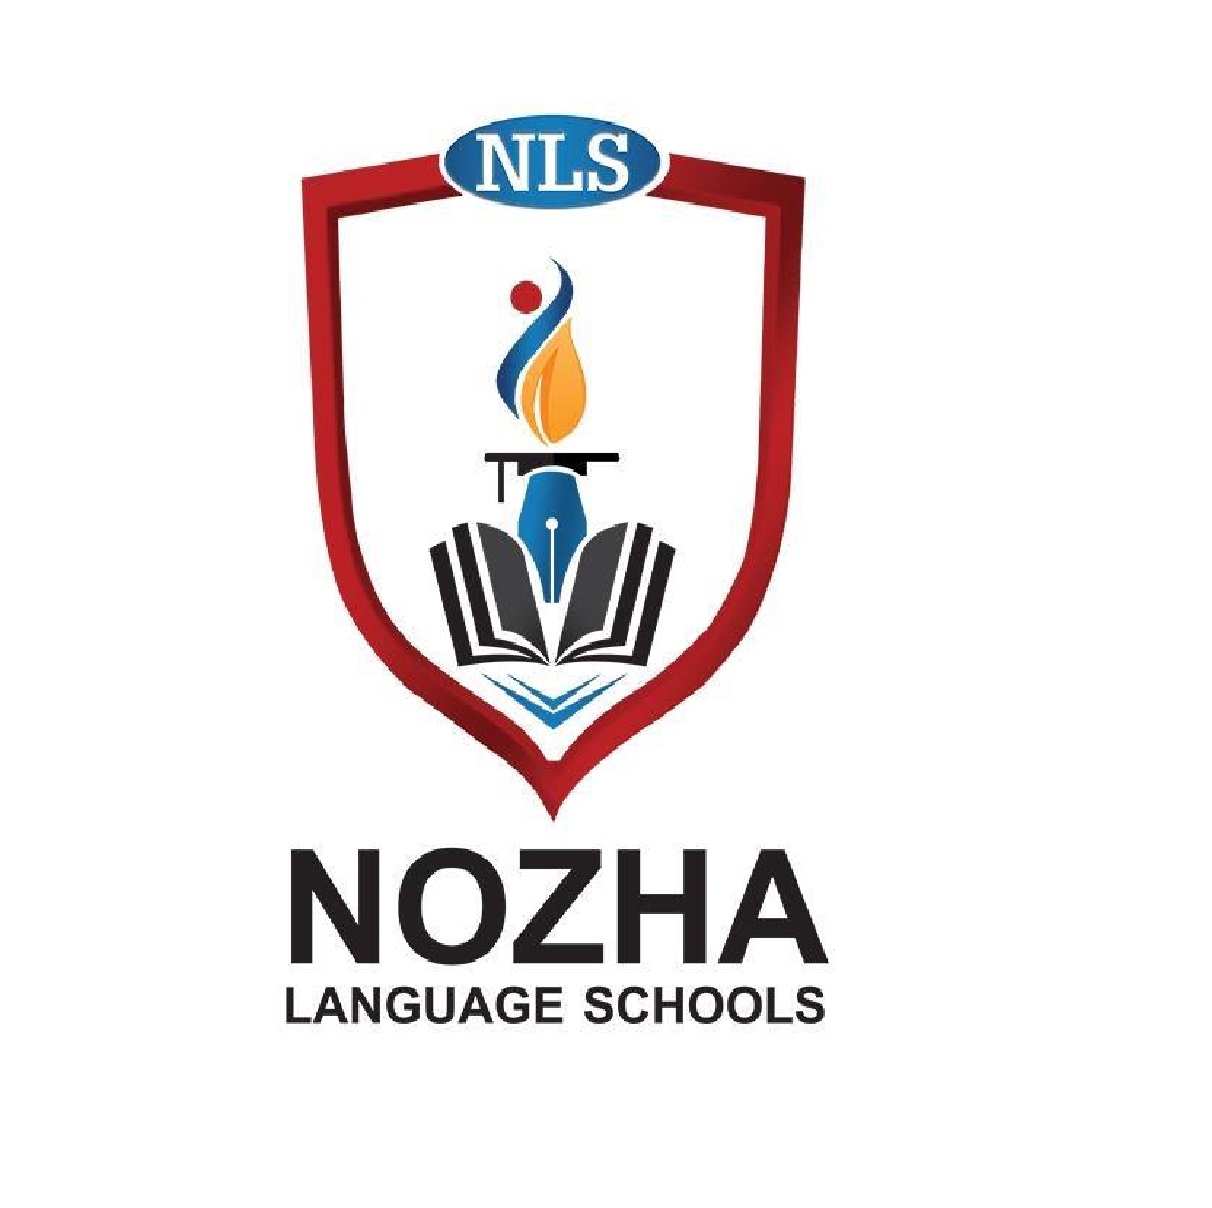 Nozha language schools